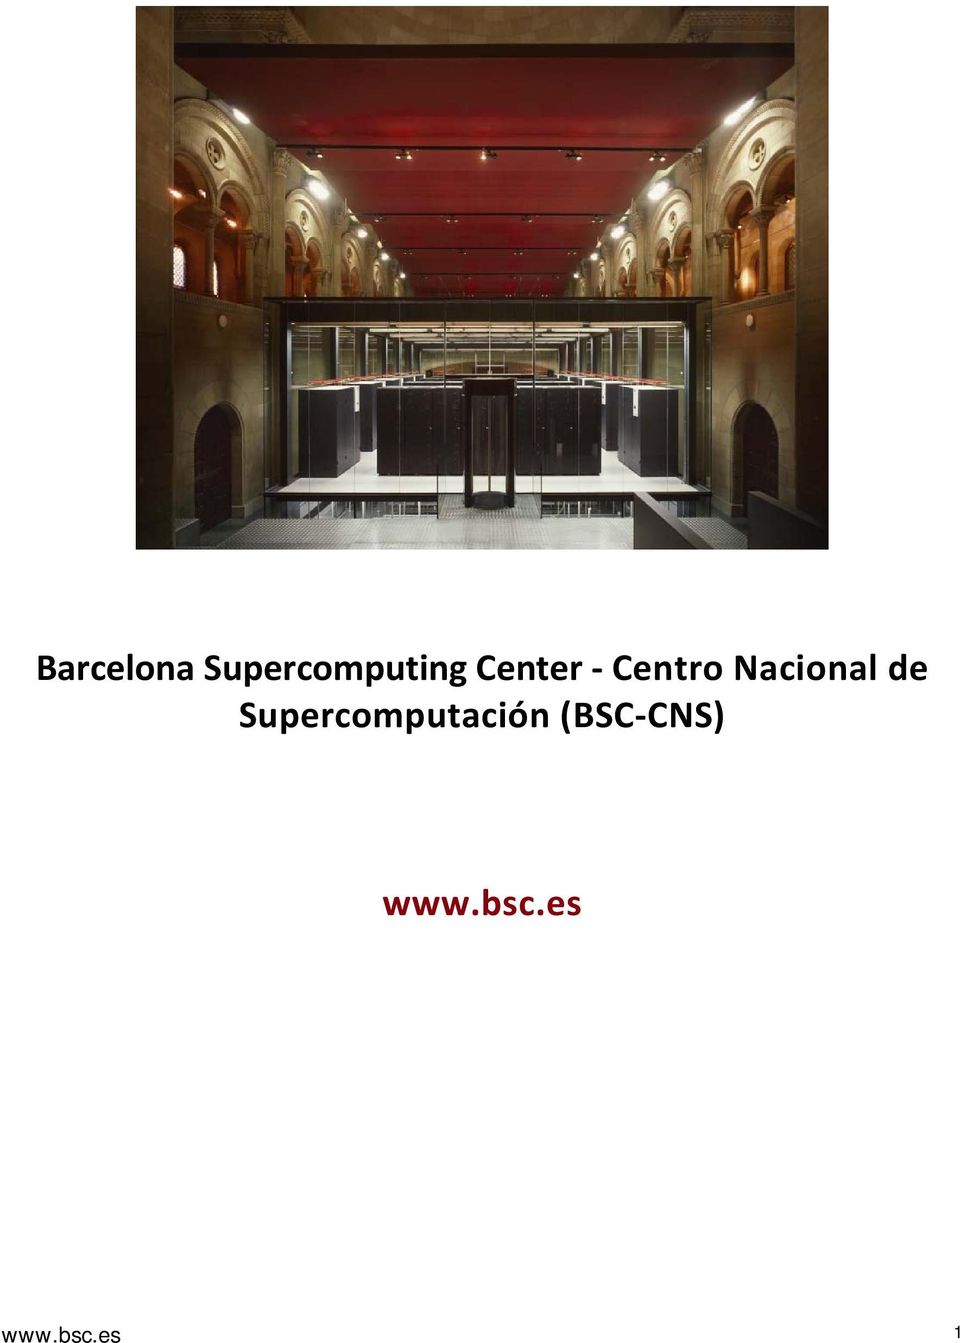 Supercomputación (BSC